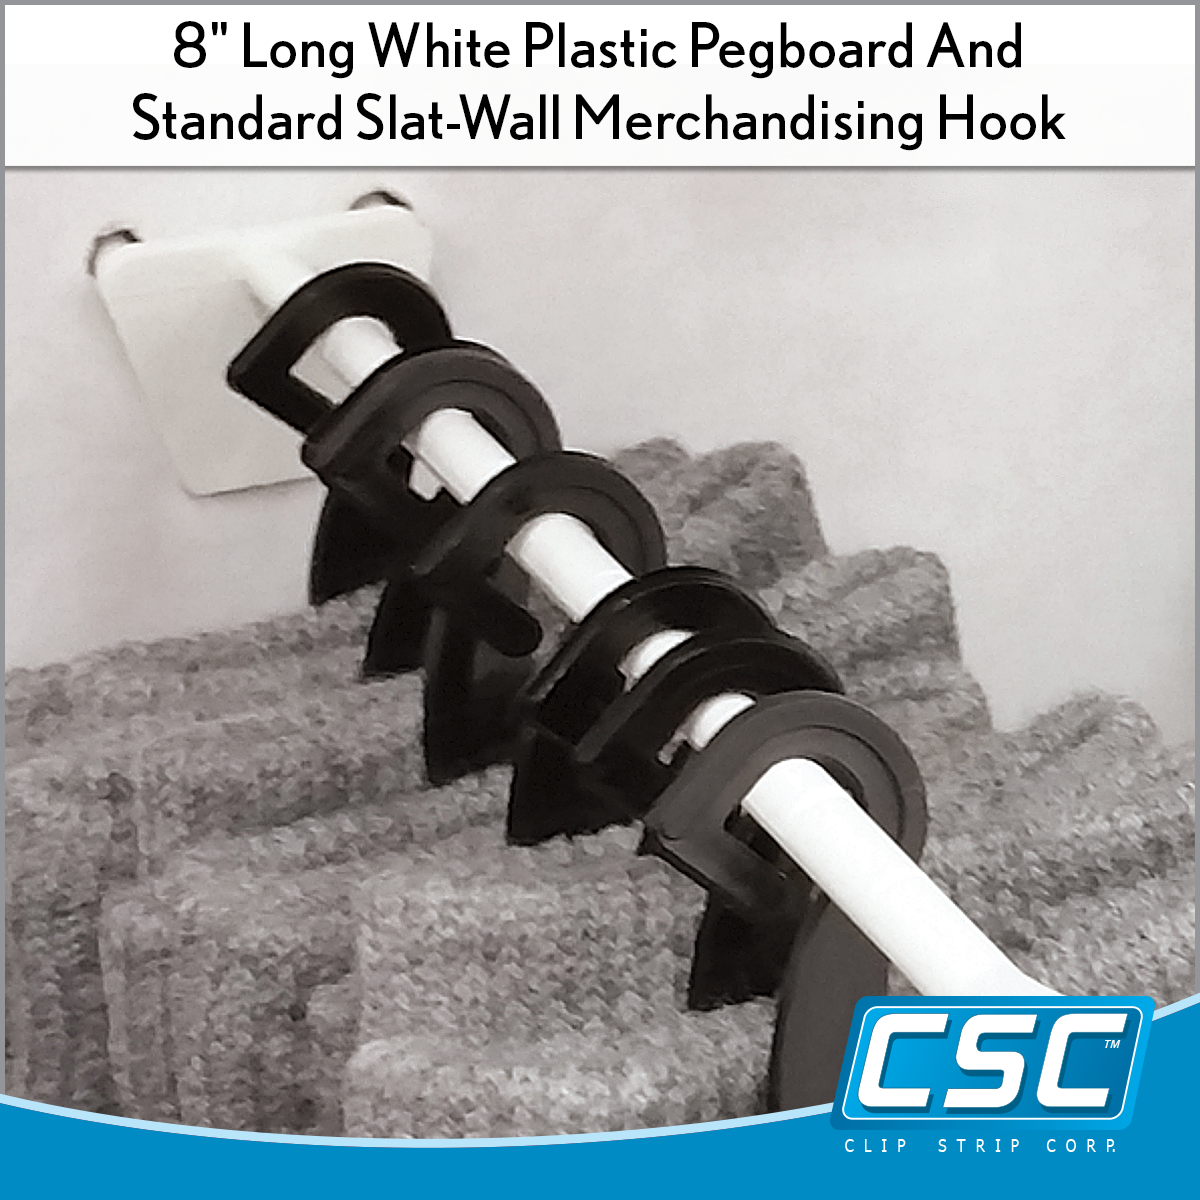 Peg Board and Slatwall Hooks - Plastic, 8 long, Retail Product  Merchandising